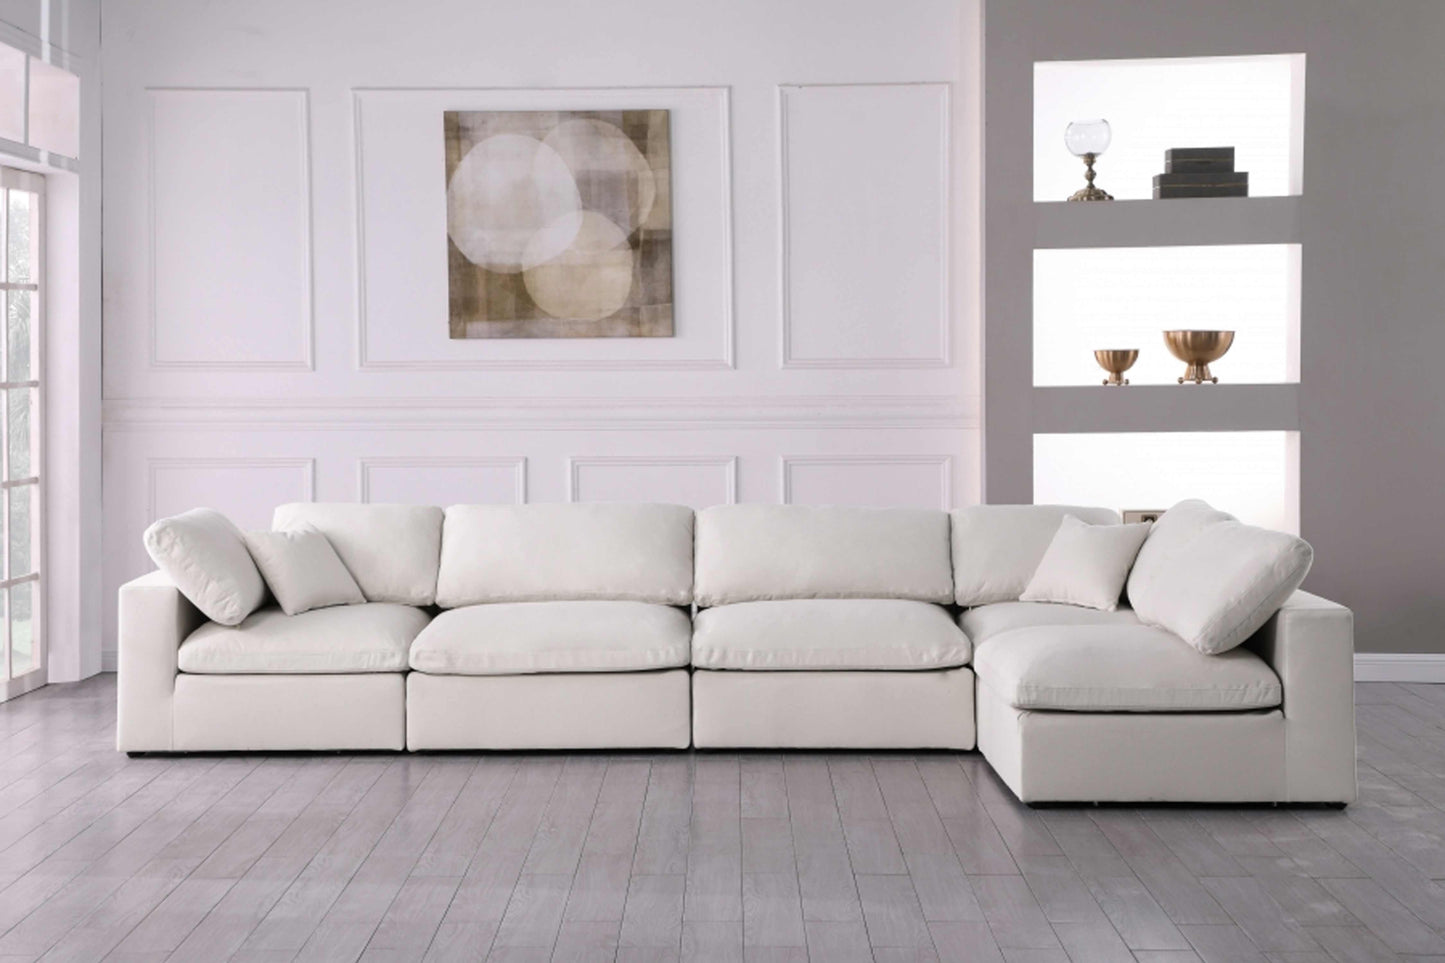 Serene Linen Deluxe Modular Down Filled Cloud-Like Comfort Overstuffed Sectional SKU: 601-Sec5D - Venini Furniture 